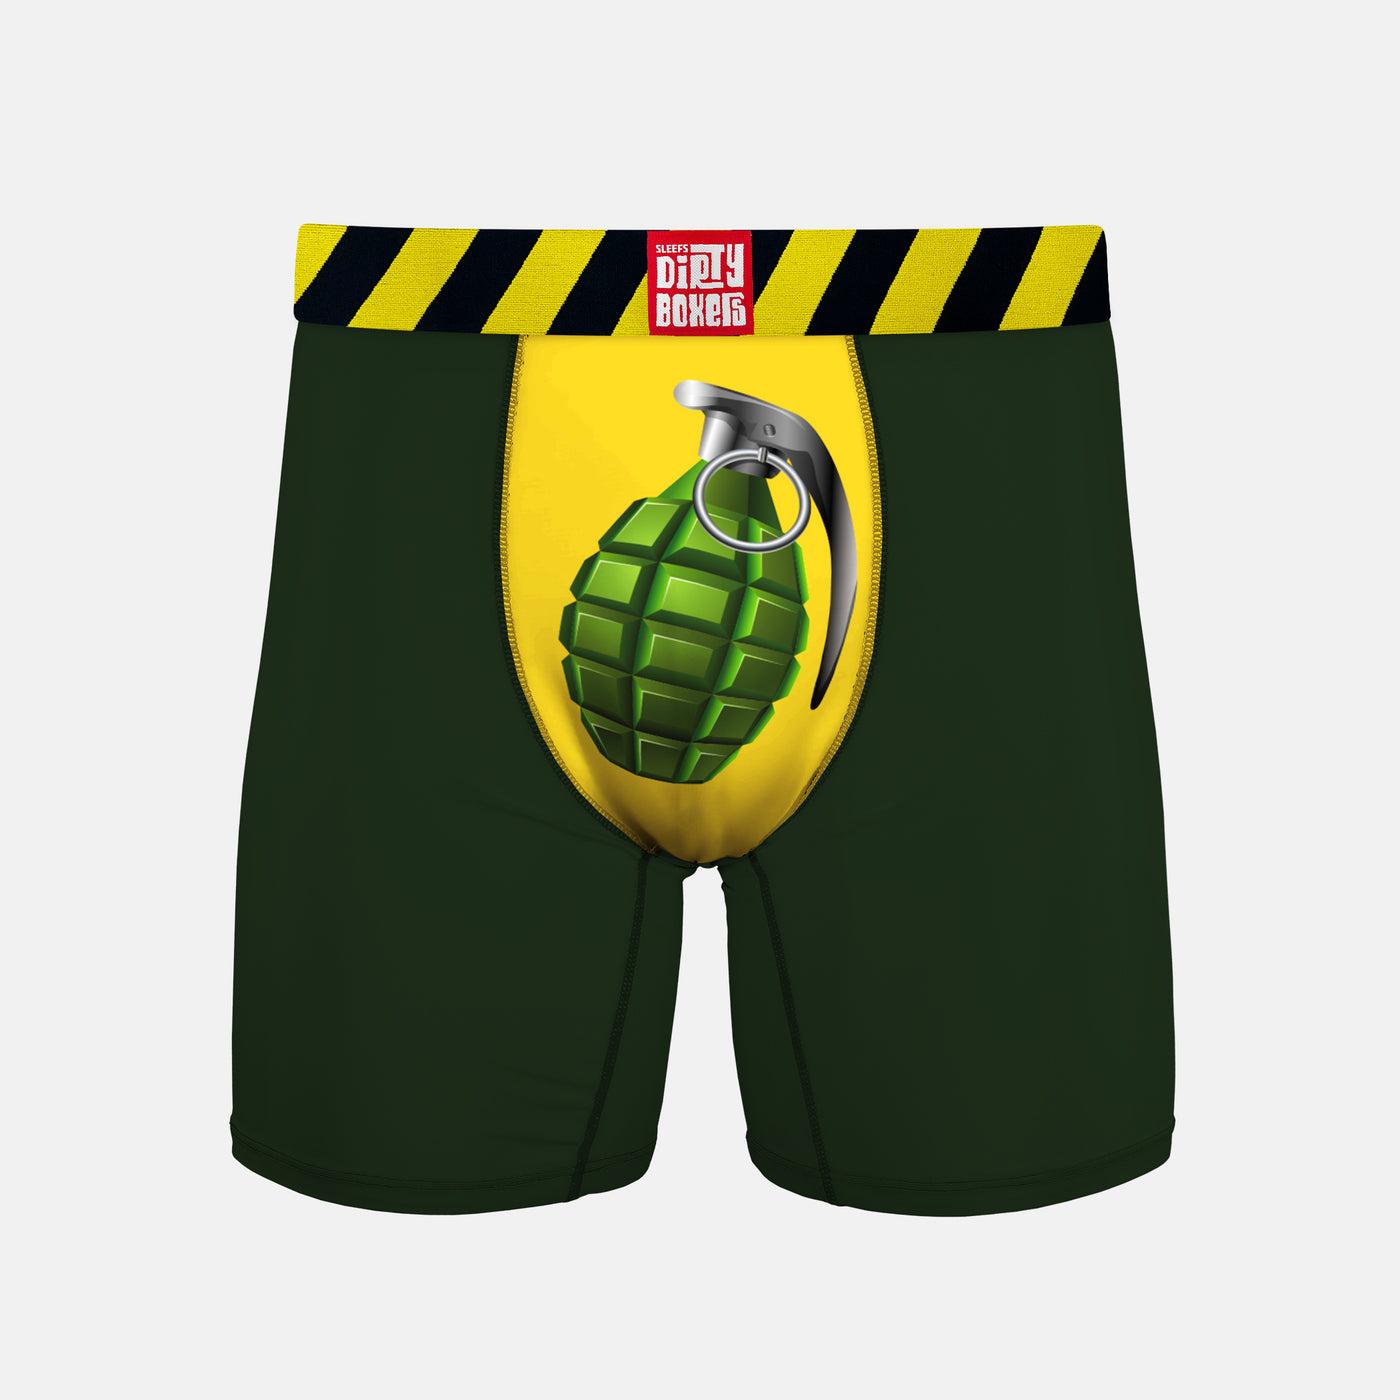 Grenade Dirty Boxers Men's Underwear